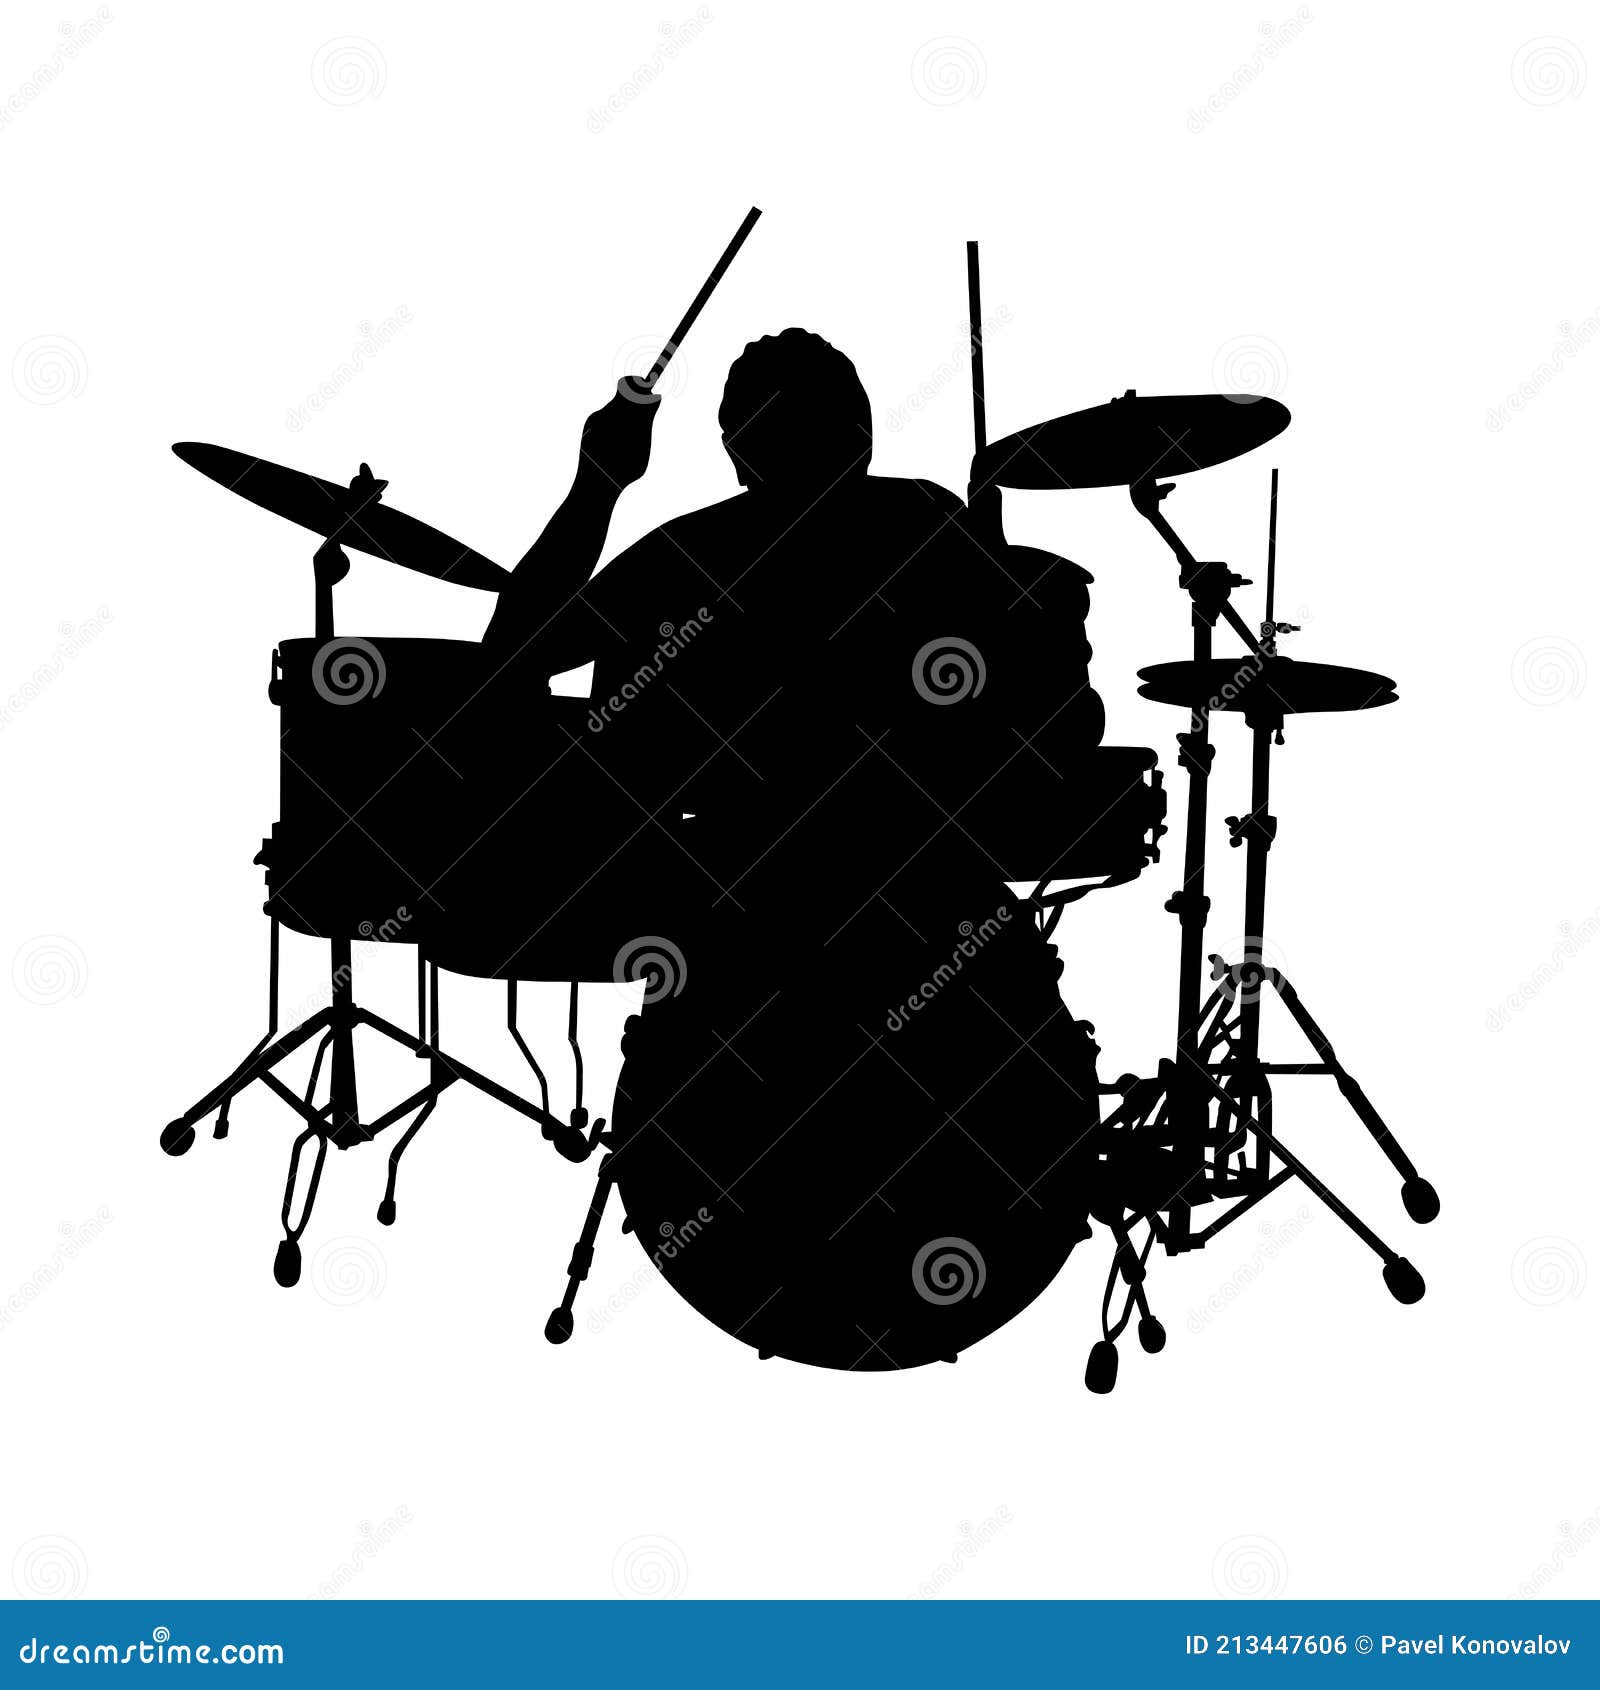 rock drummer silhouette